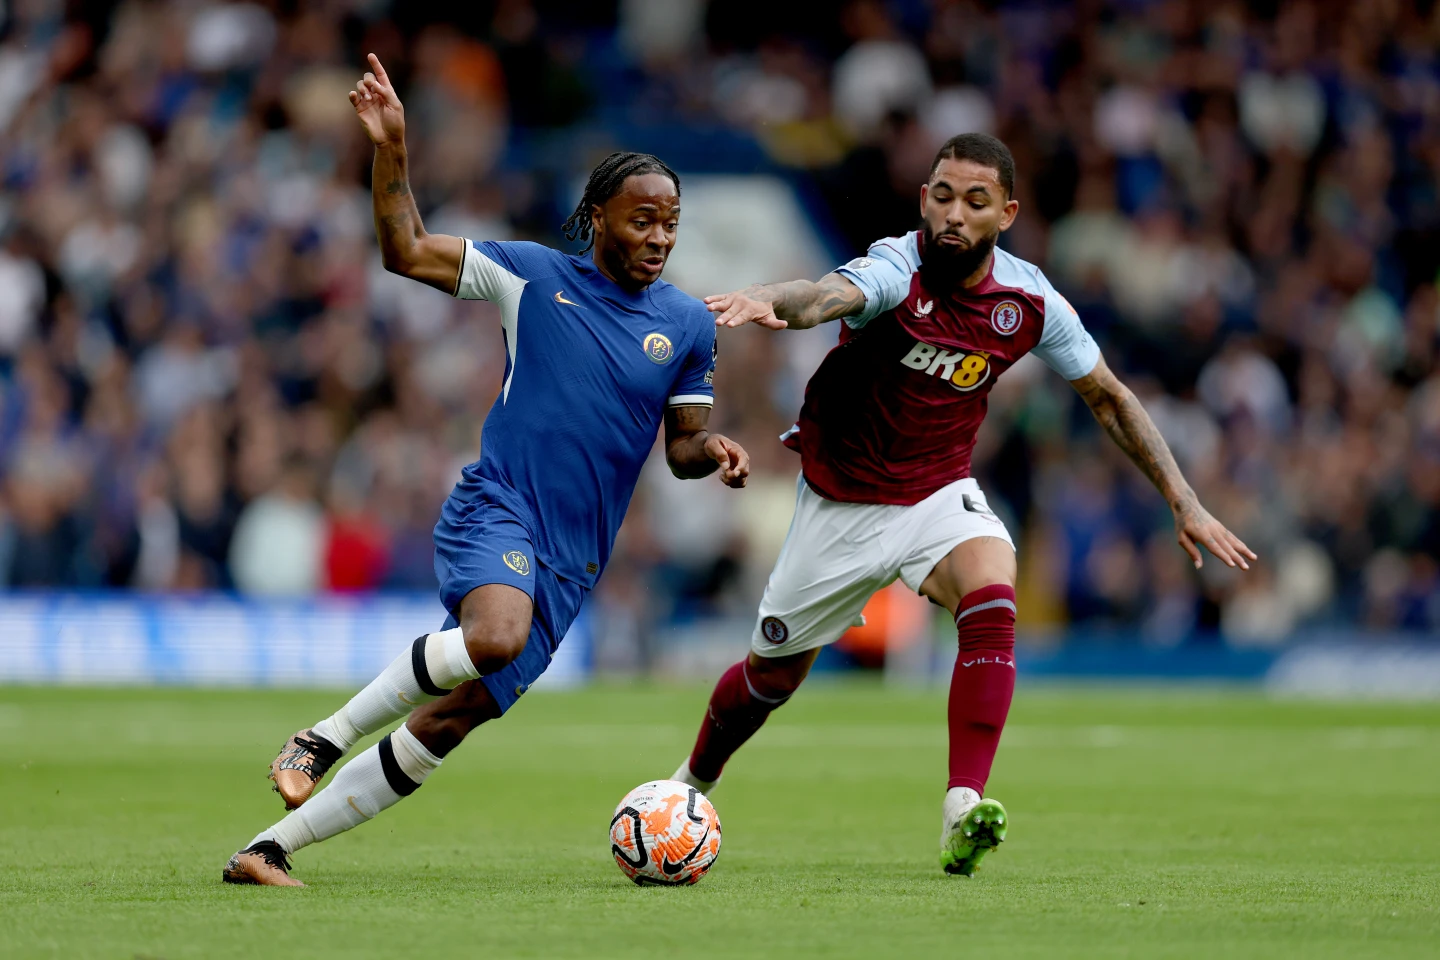 Aston Villa vs Chelsea Live Stream Info, How To Watch Premier League Live On TV